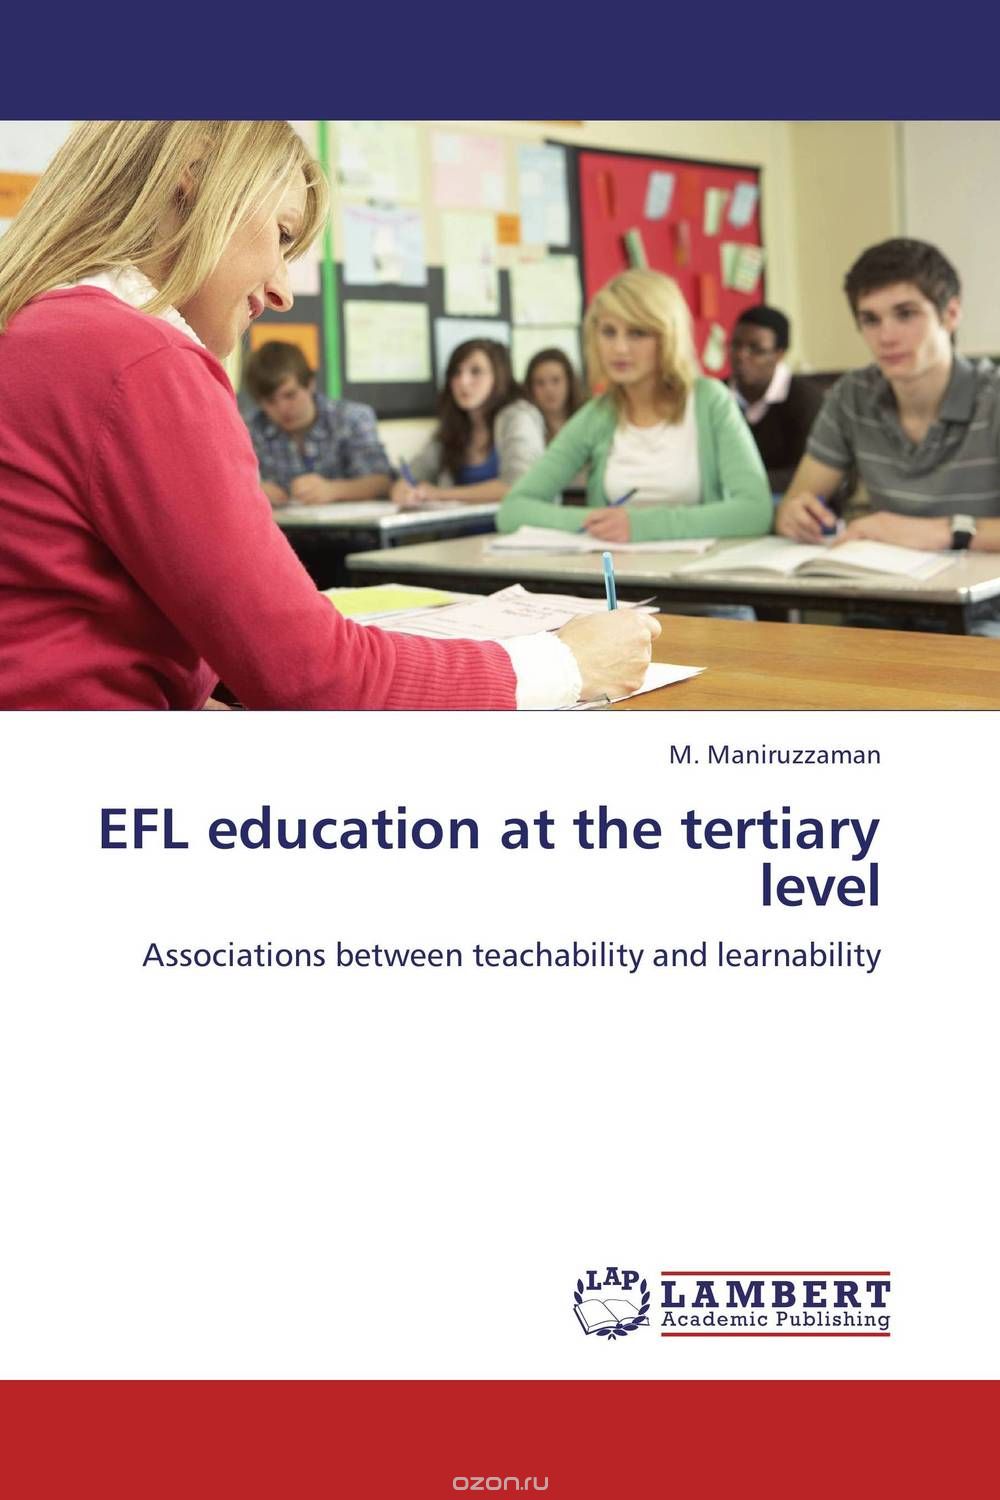 Скачать книгу "EFL education at the tertiary level"